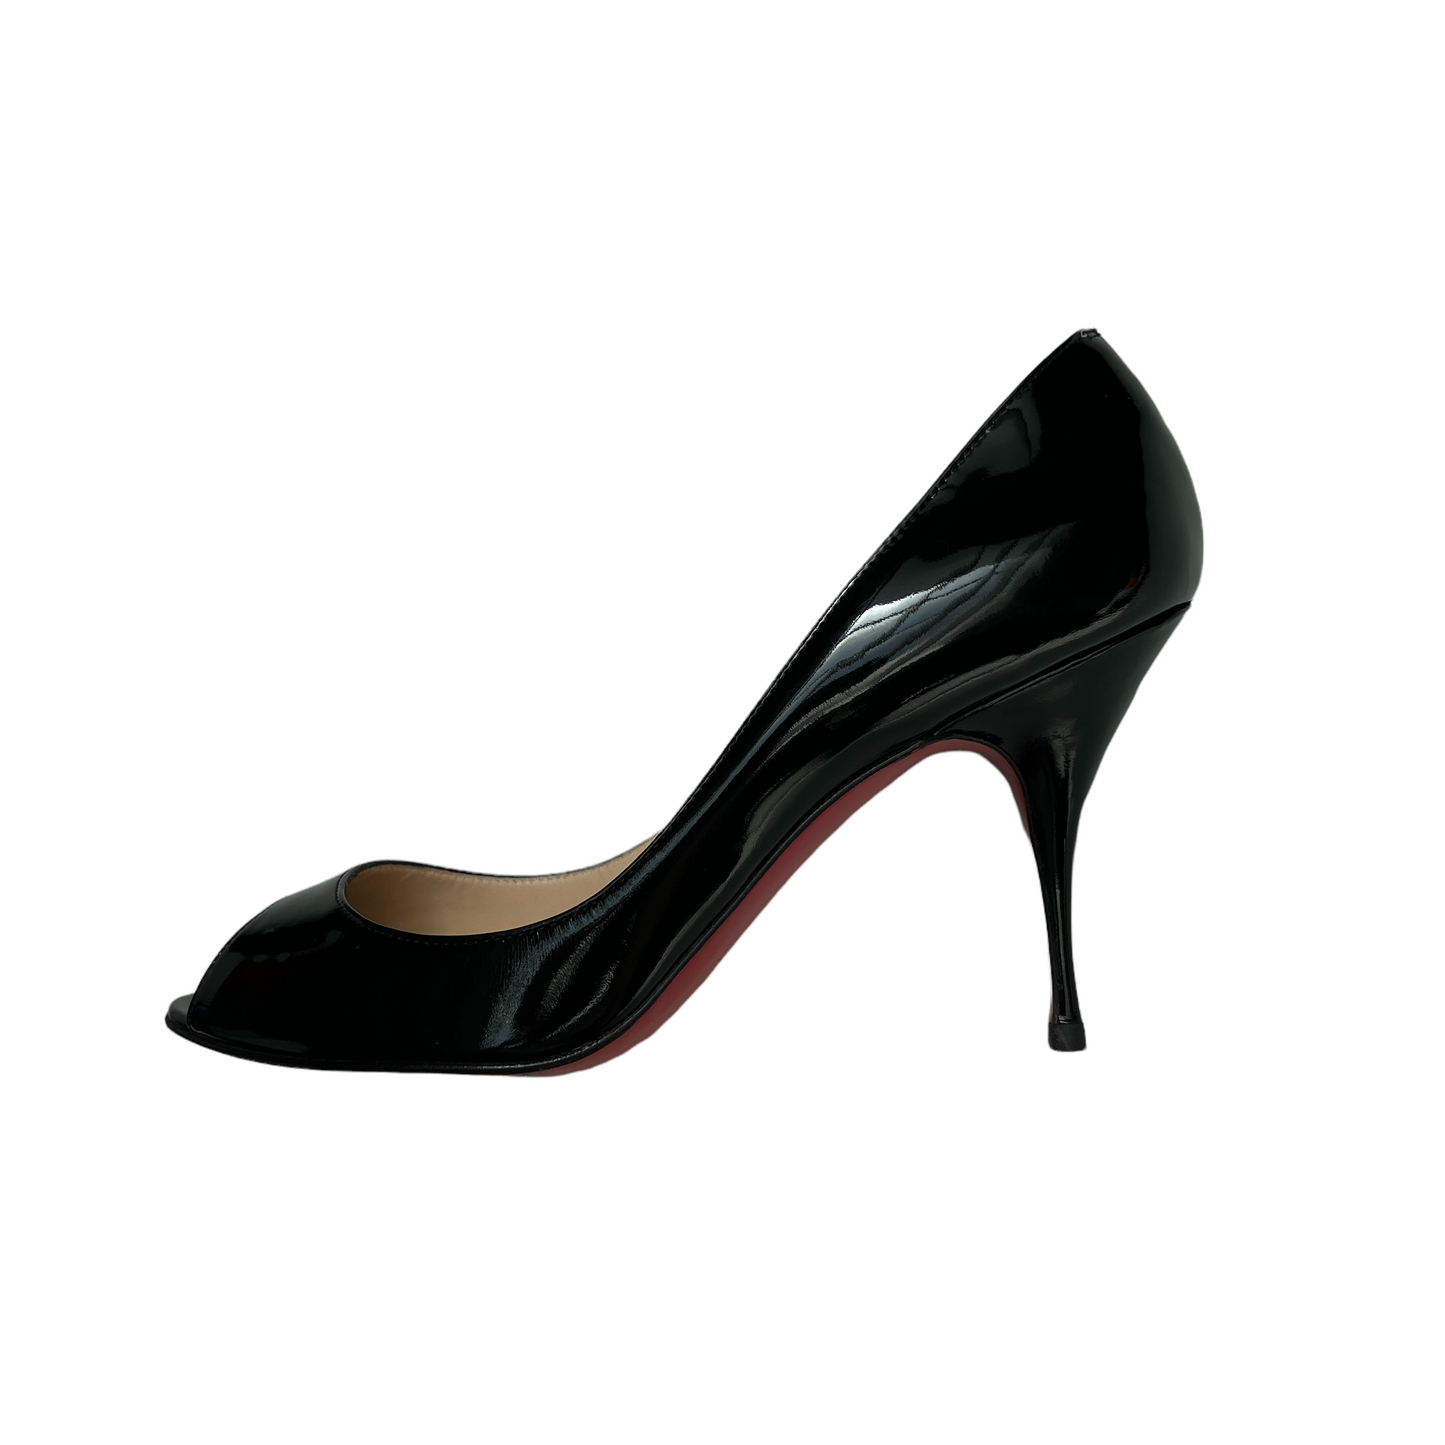 Black Patent Heels - 8.5